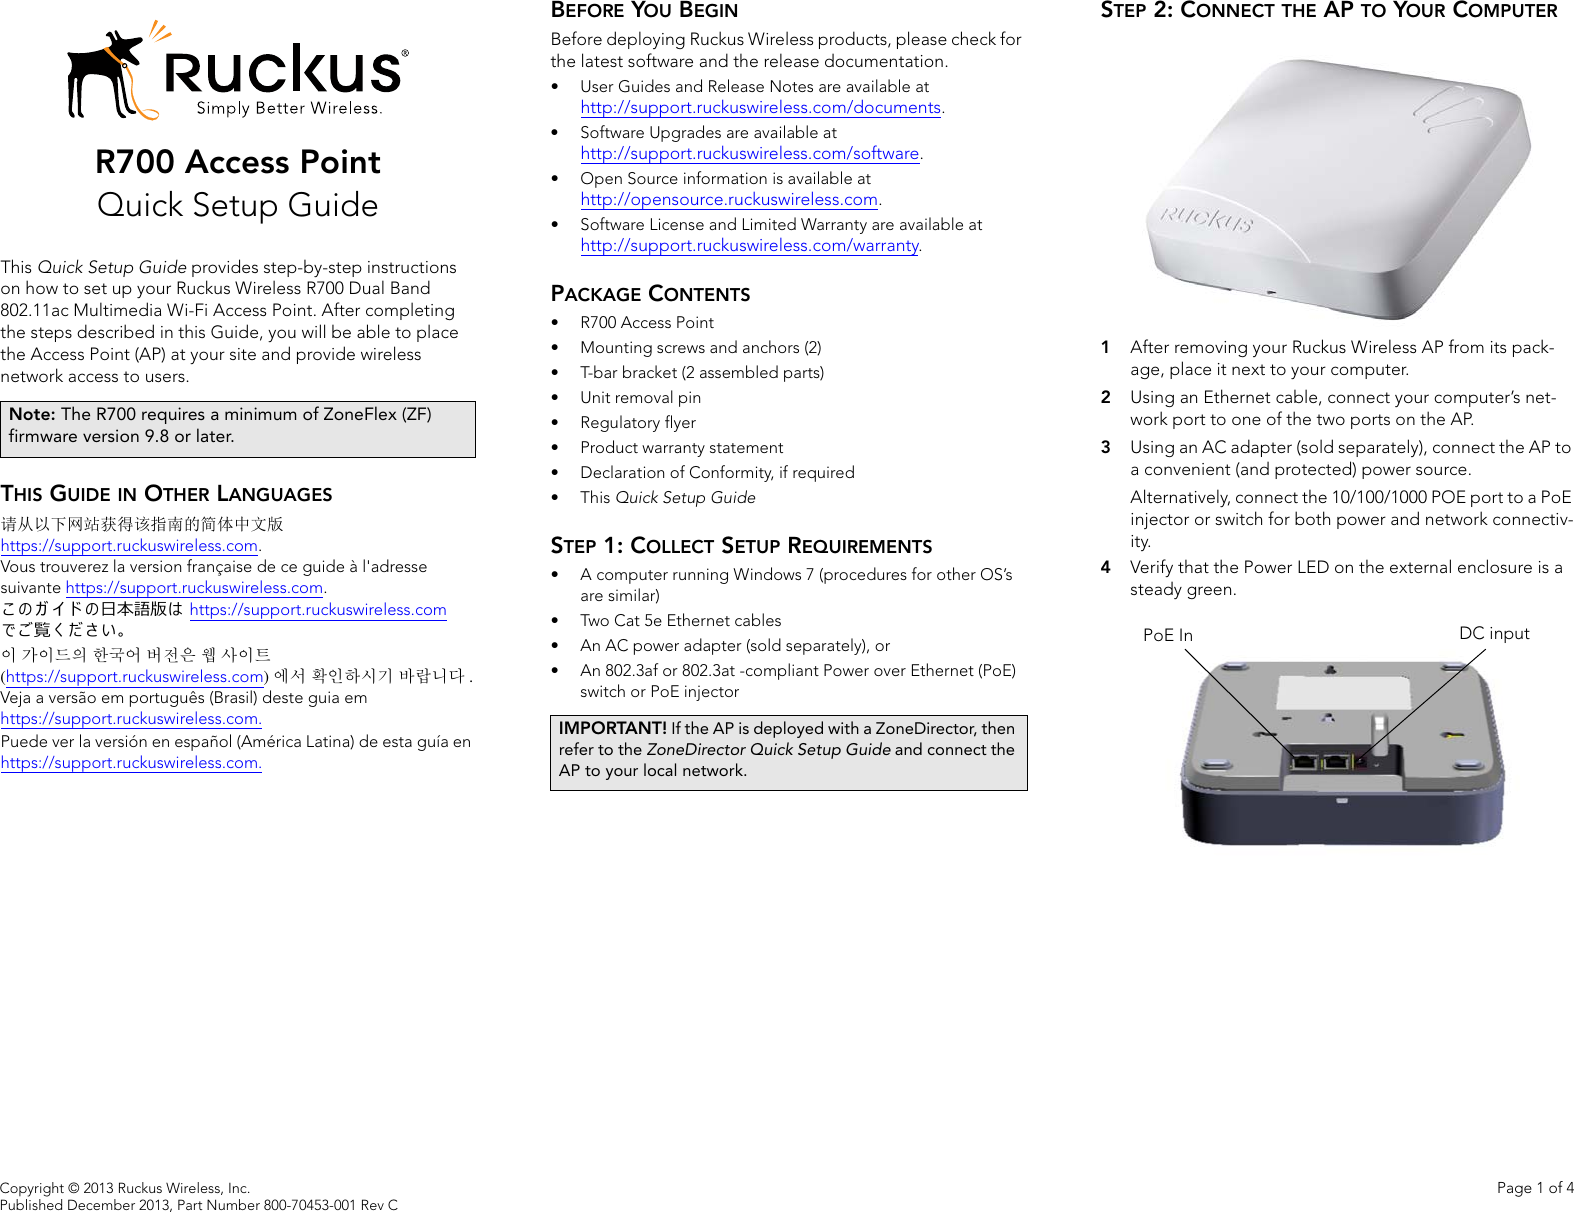 Ruckus R700 Quick Setup Guide Access Point qsg 800 70453 001 rev C 20131220